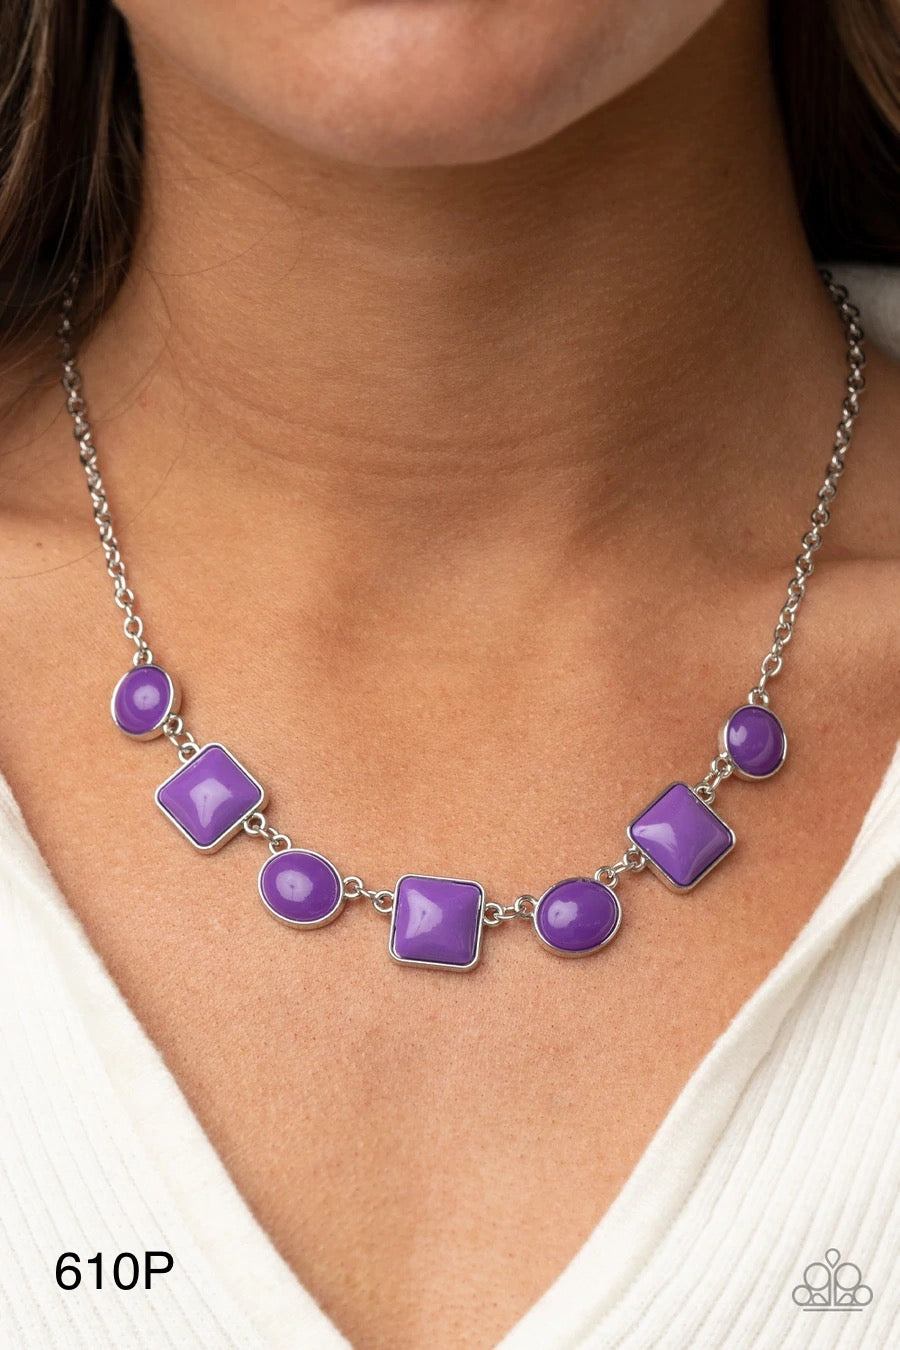 Paparazzi “Trend Worthy” Purple Necklace Earring Set